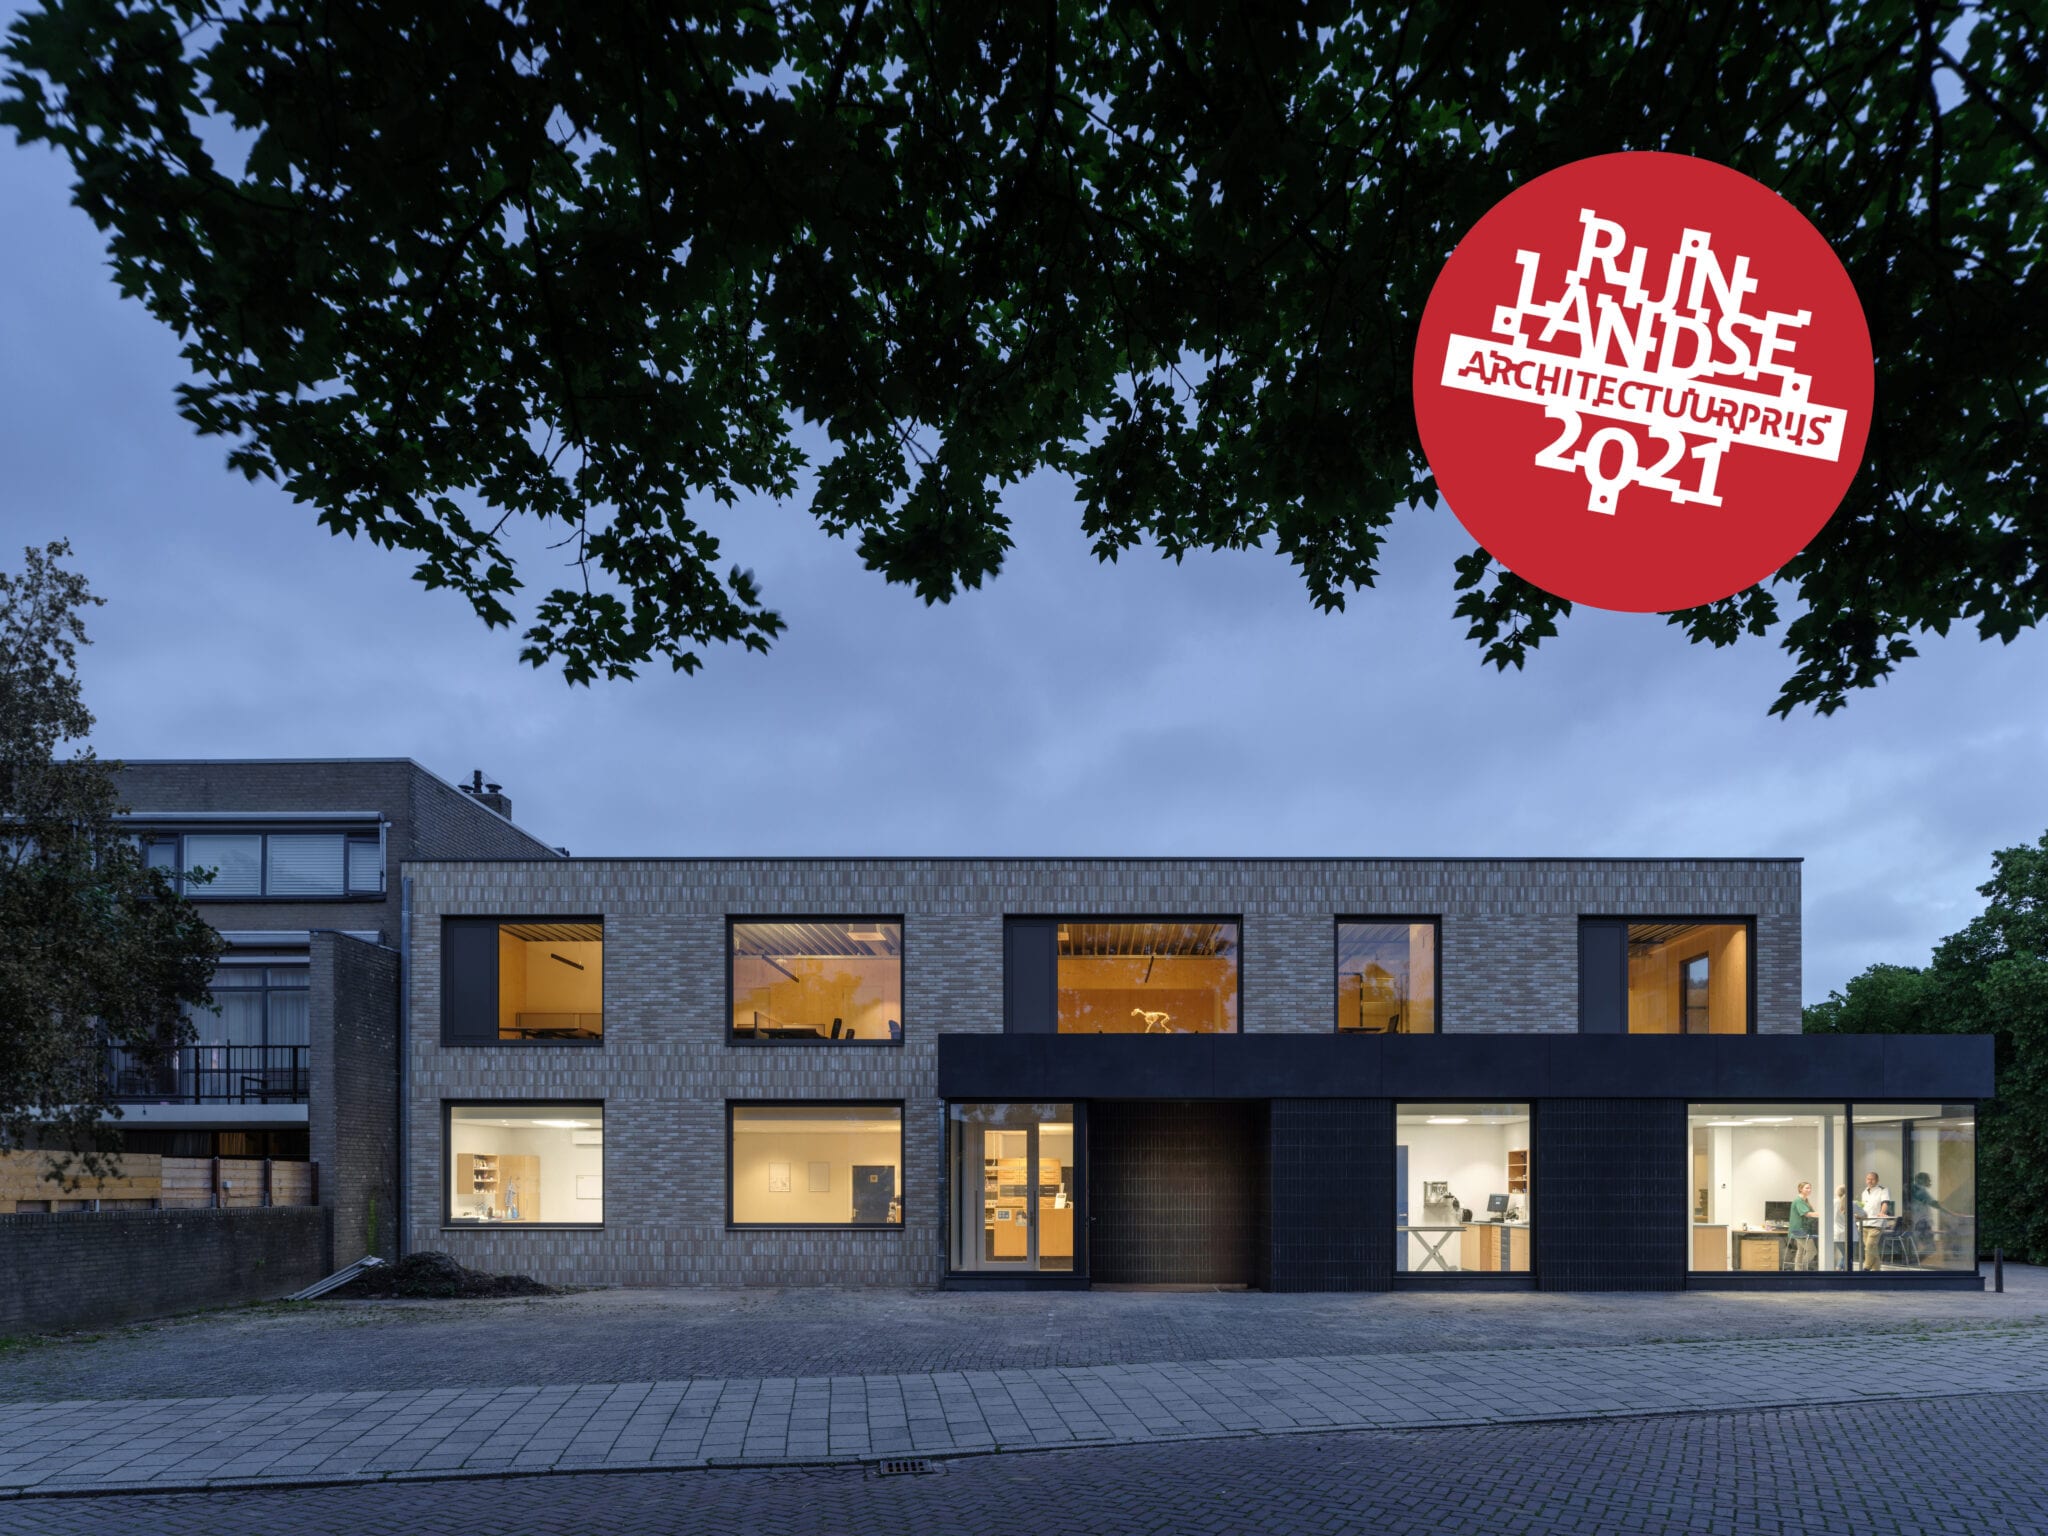 Nominated Rijnlandse Architectuurprijs 2021 RAP Anicura Dierenkliniek 't Leidse Land